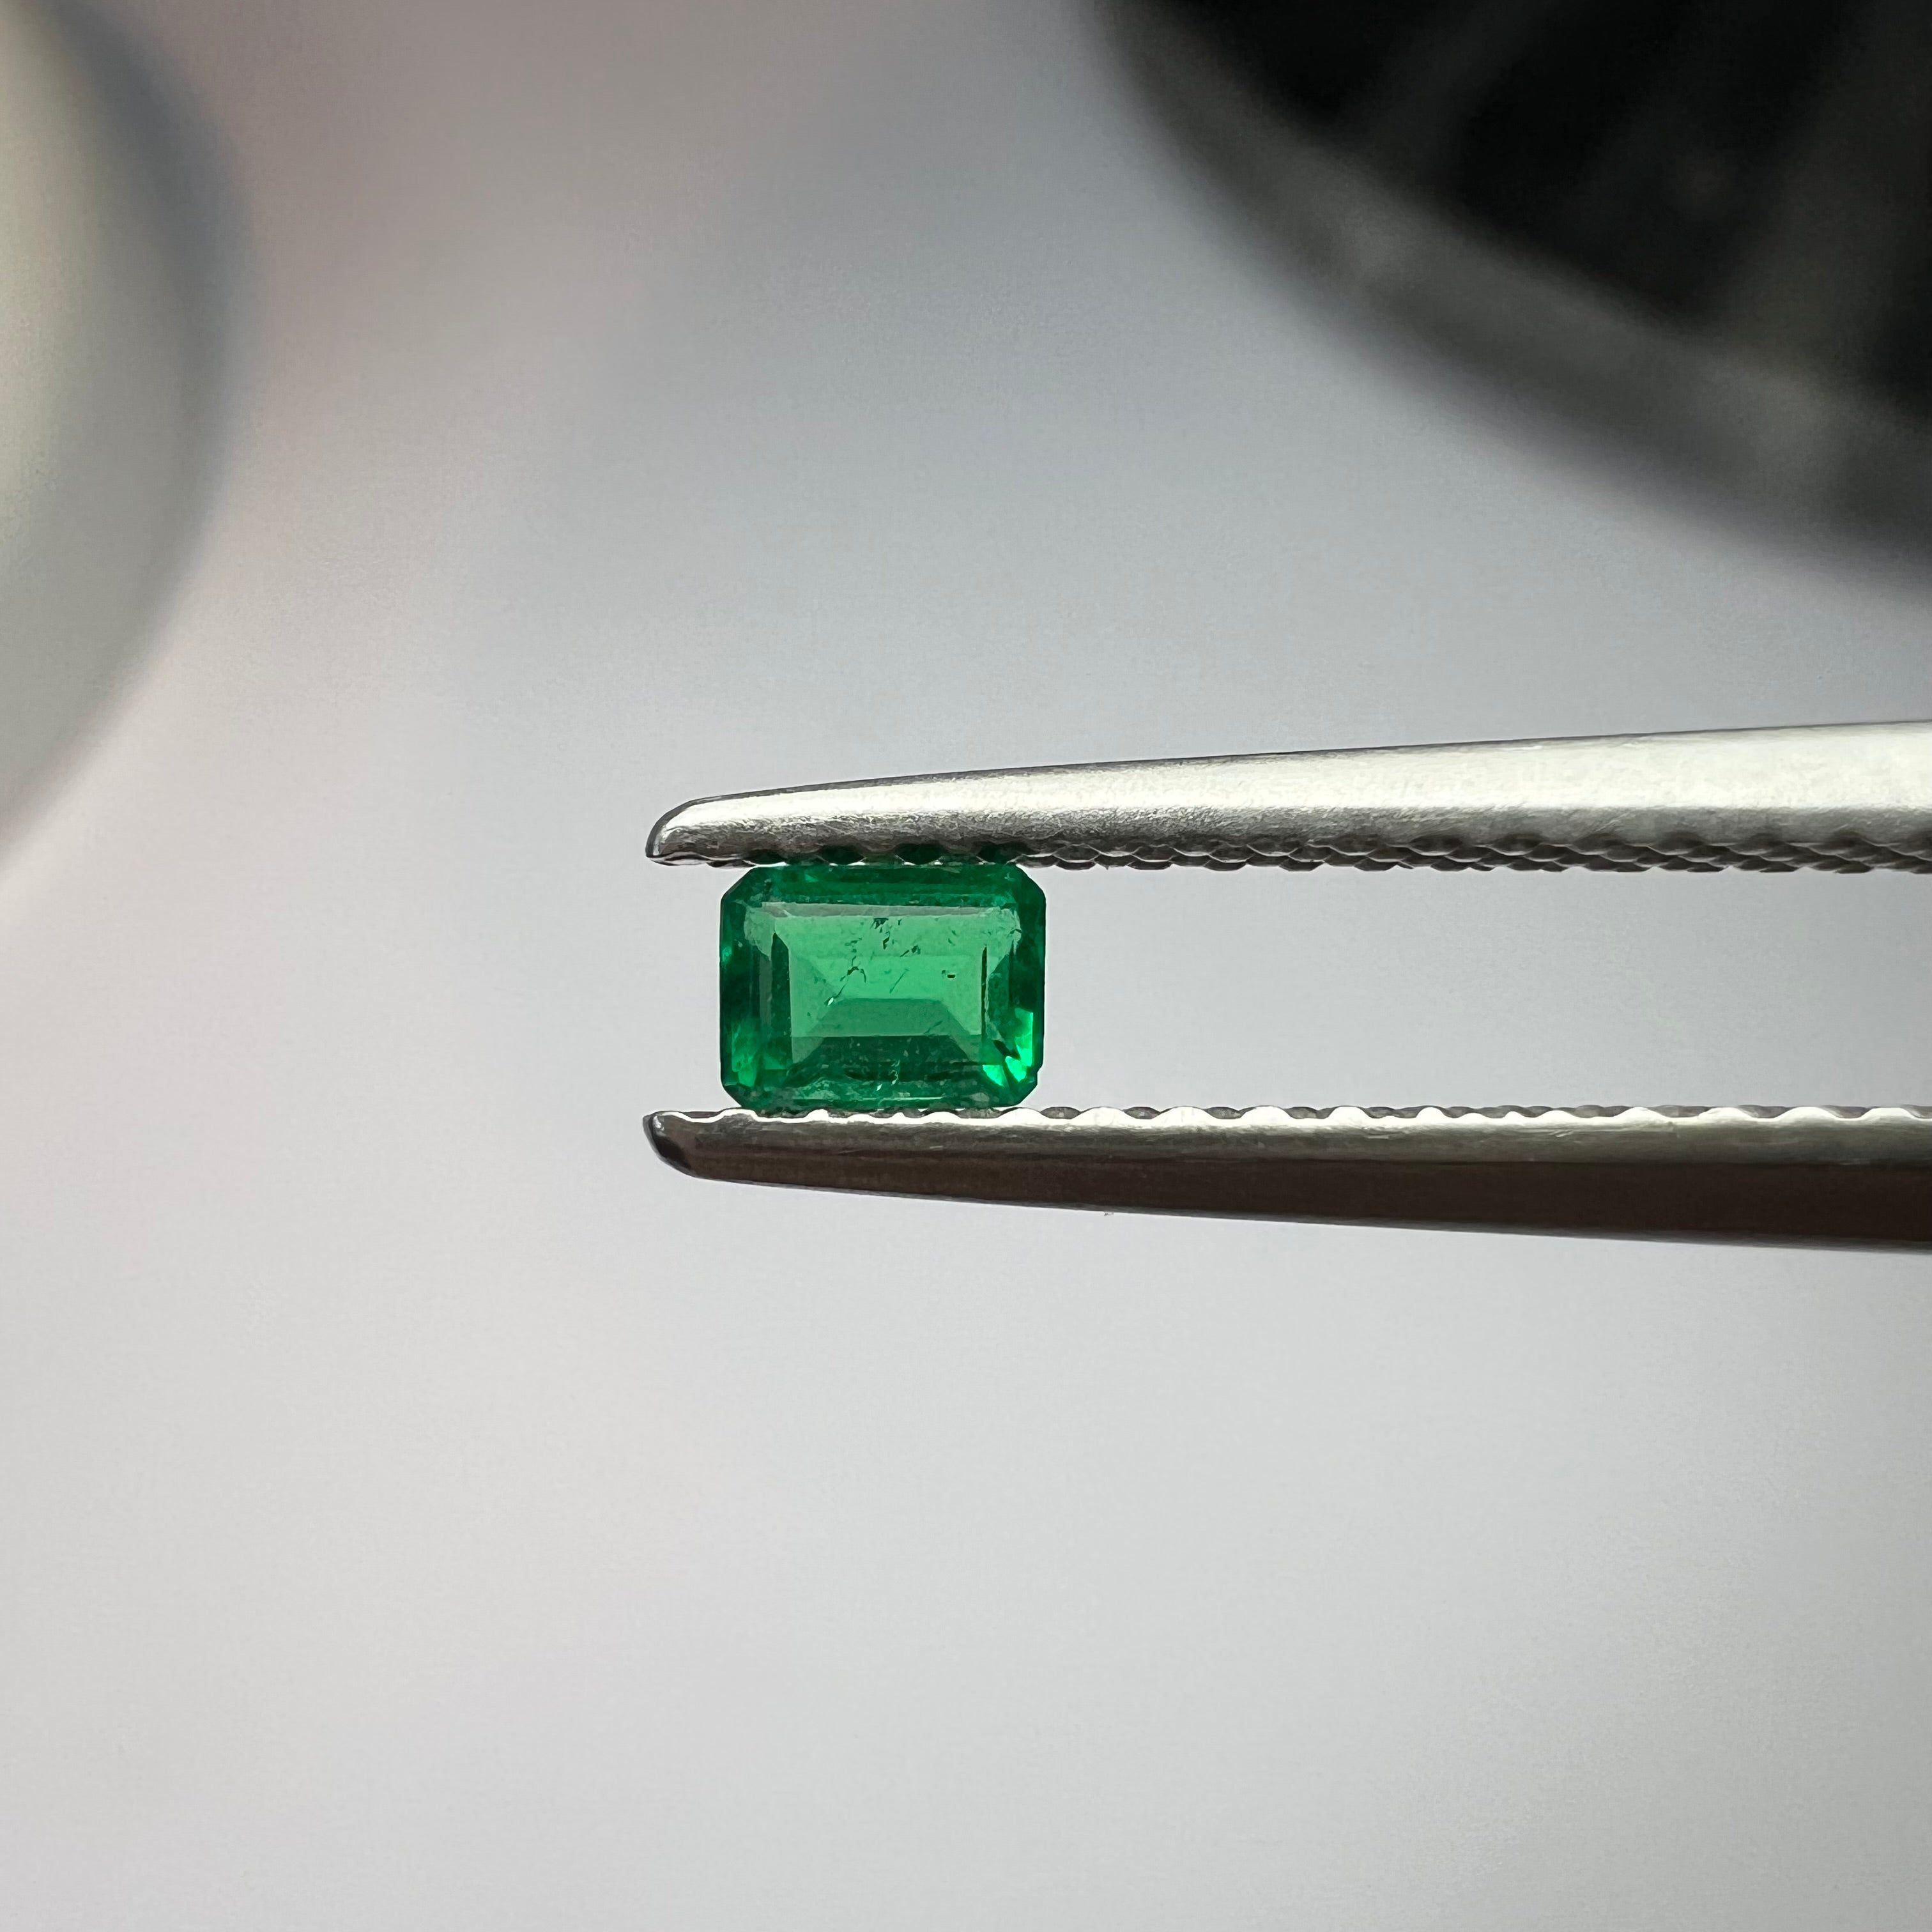 .13CT Loose Colombian Emerald, Emerald Cut 3.56x2.7x1.75mm Earth mined Gemstone